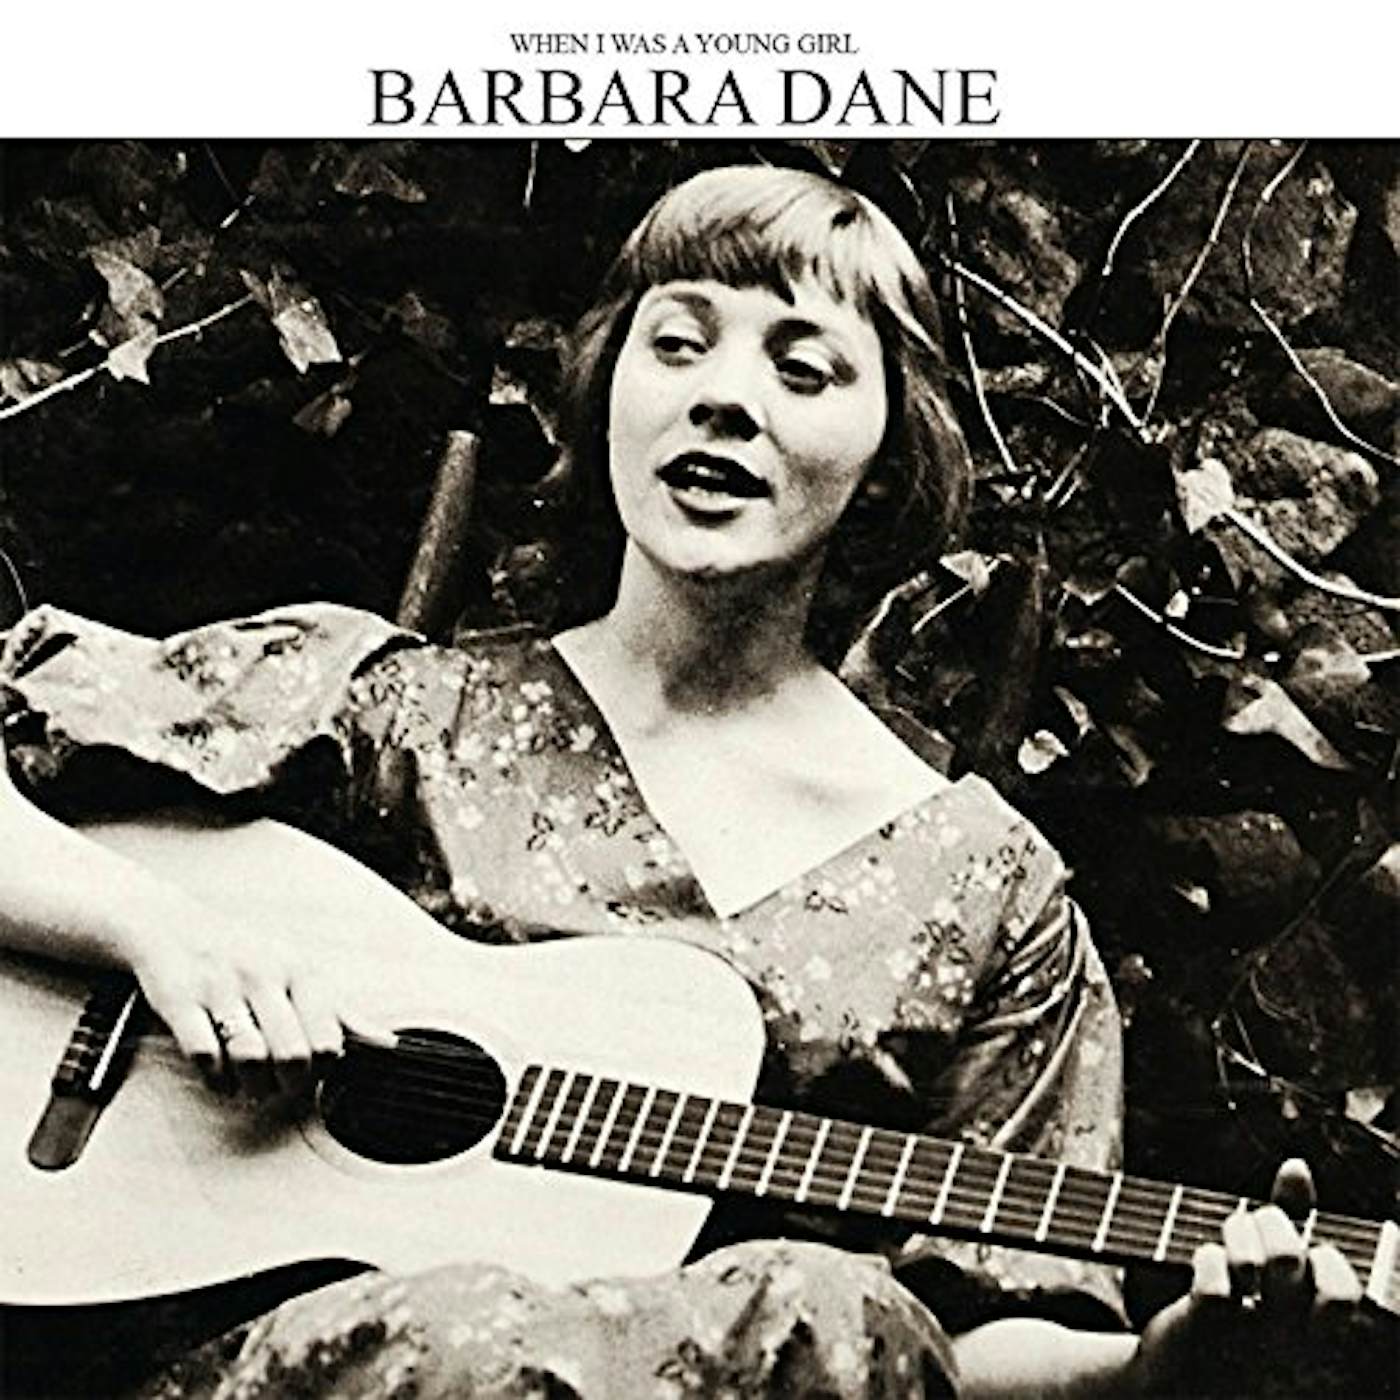 Barbara Dane WHEN I WAS A YOUNG GIRL CD